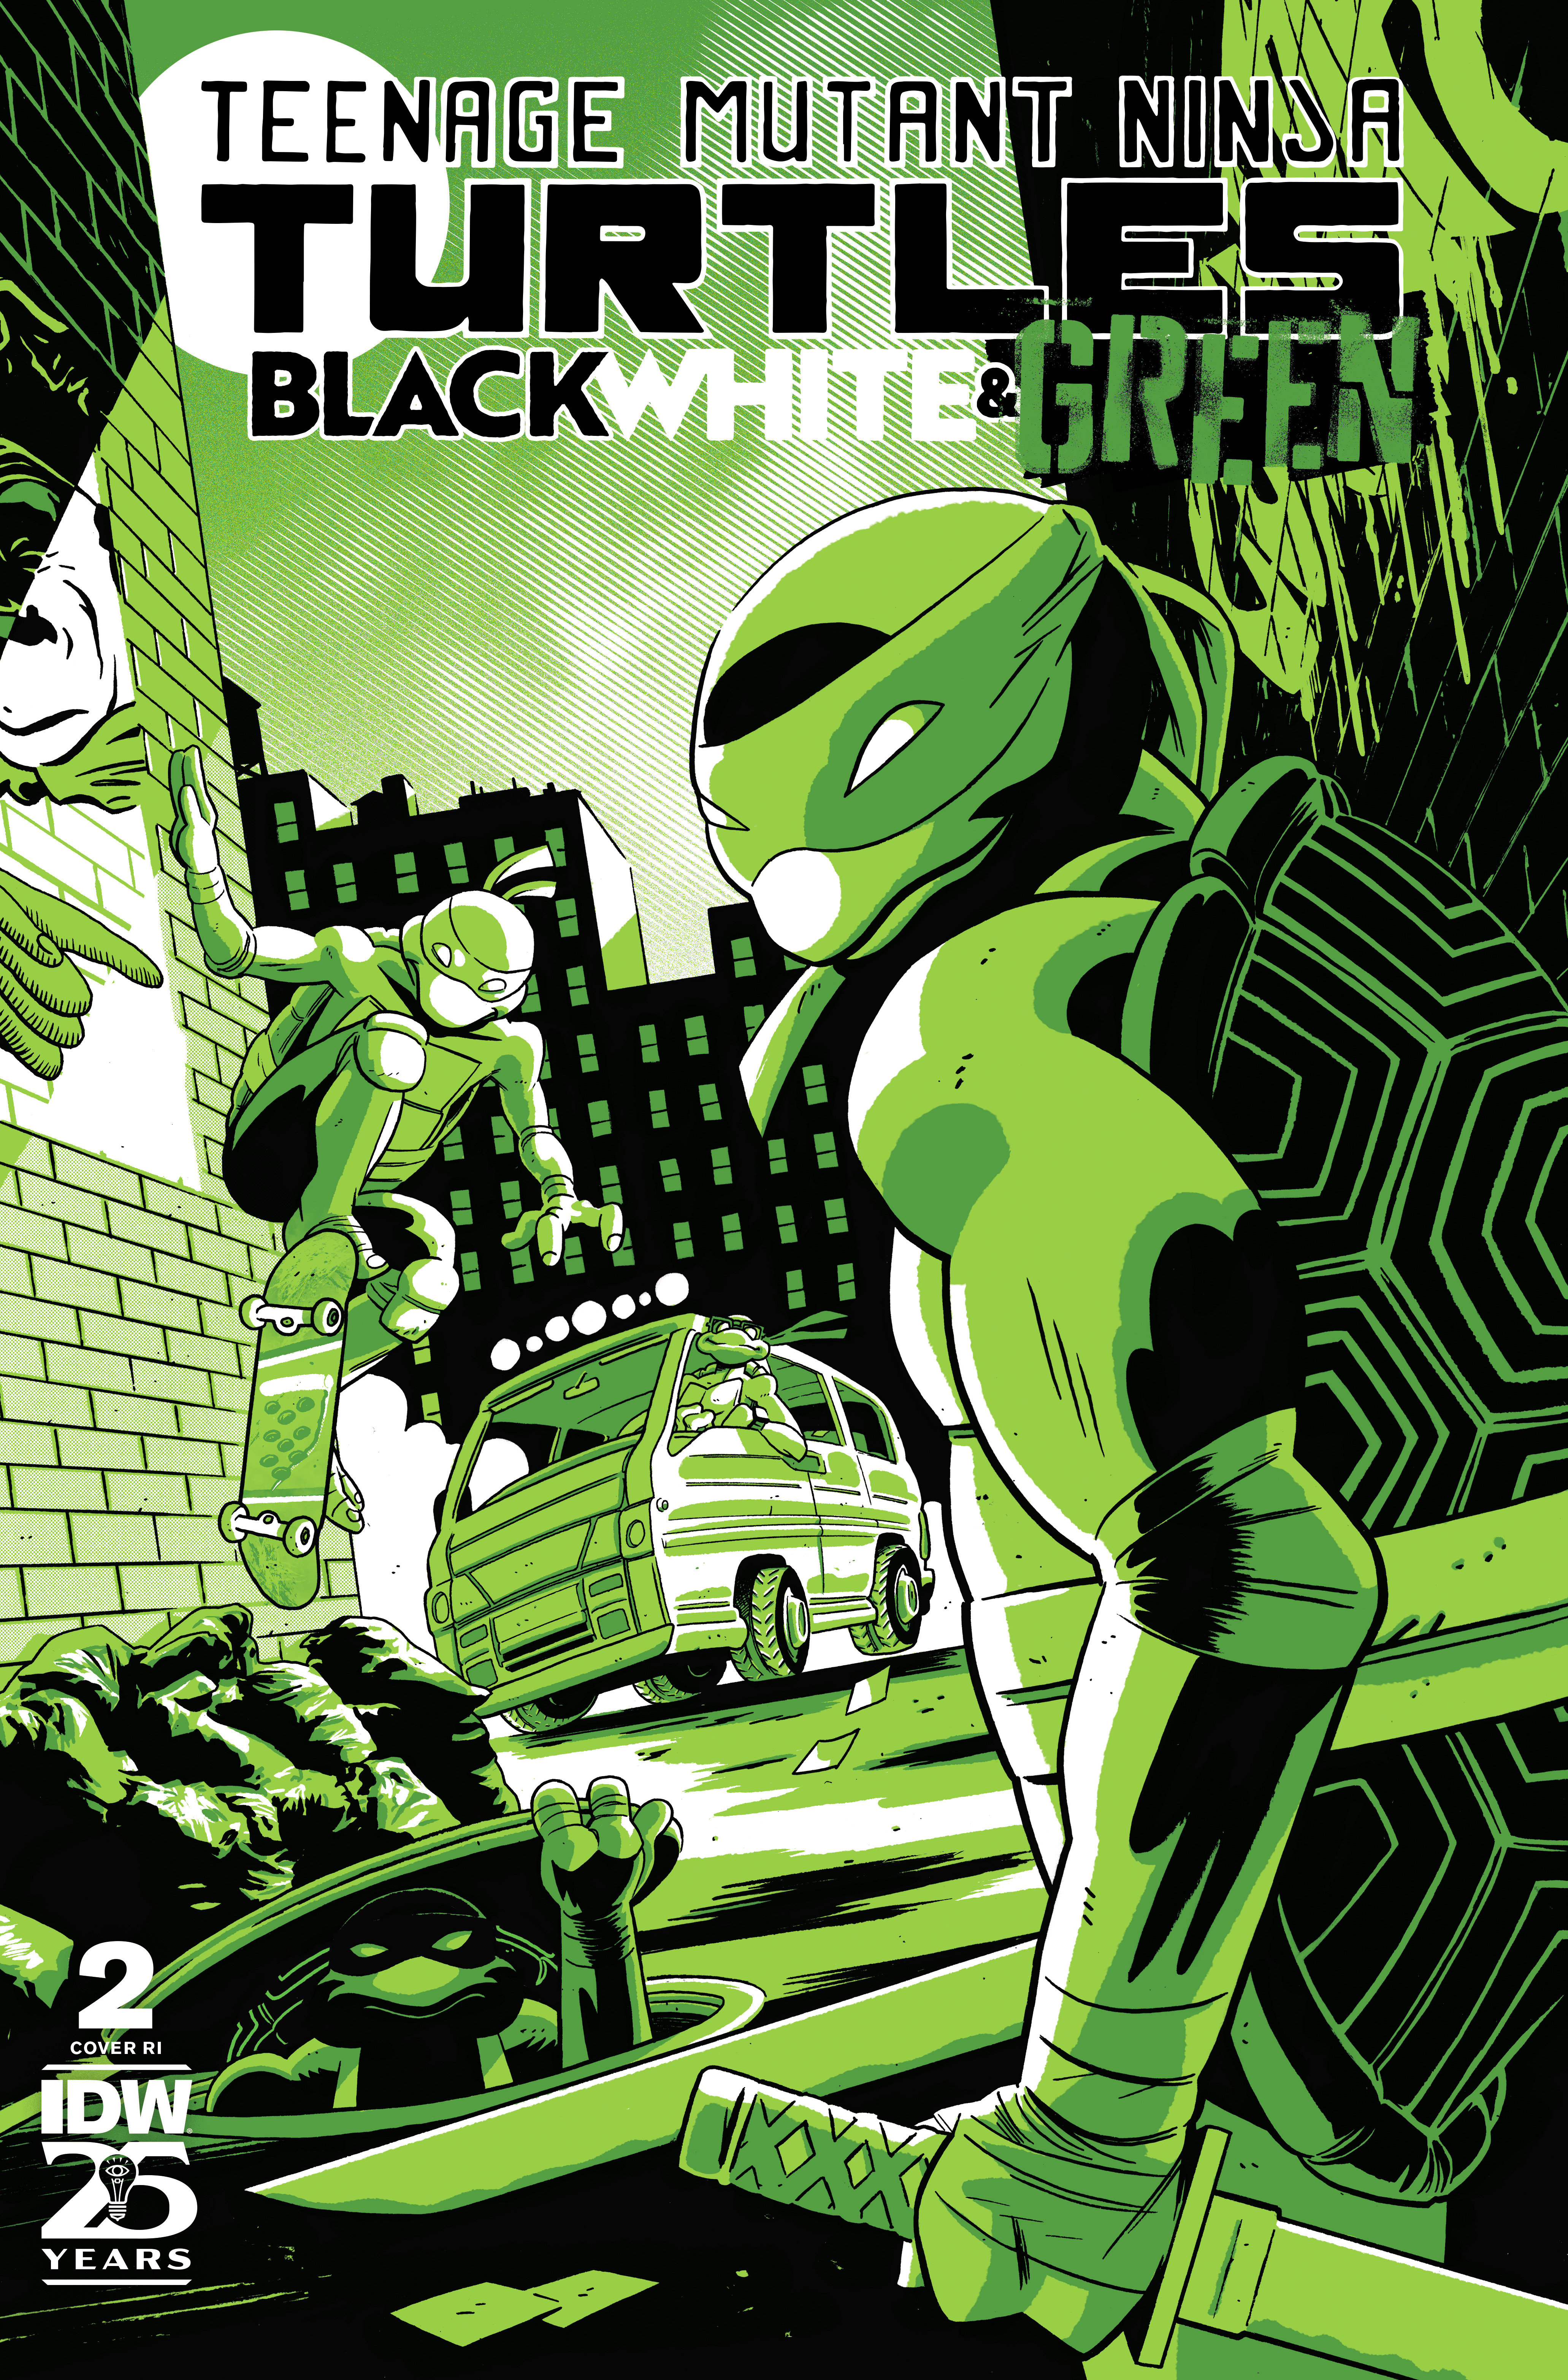 Teenage Mutant Ninja Turtles: Black White & Green #2 Cover Boss Foil Variant 1 for 10 Incentive Variant